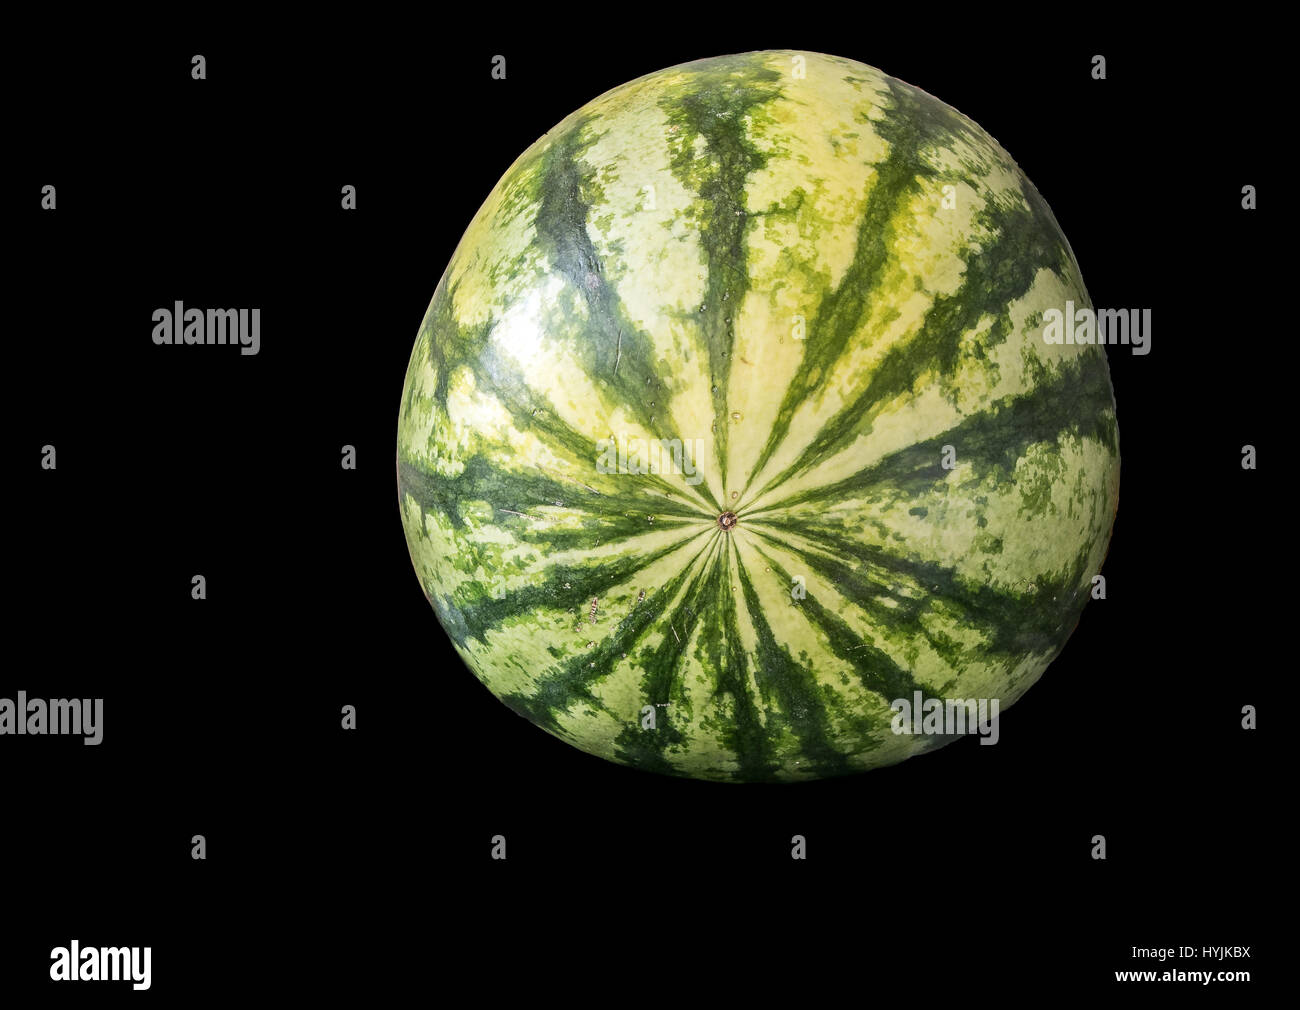 Whole watermelon isolated on black background Stock Photo